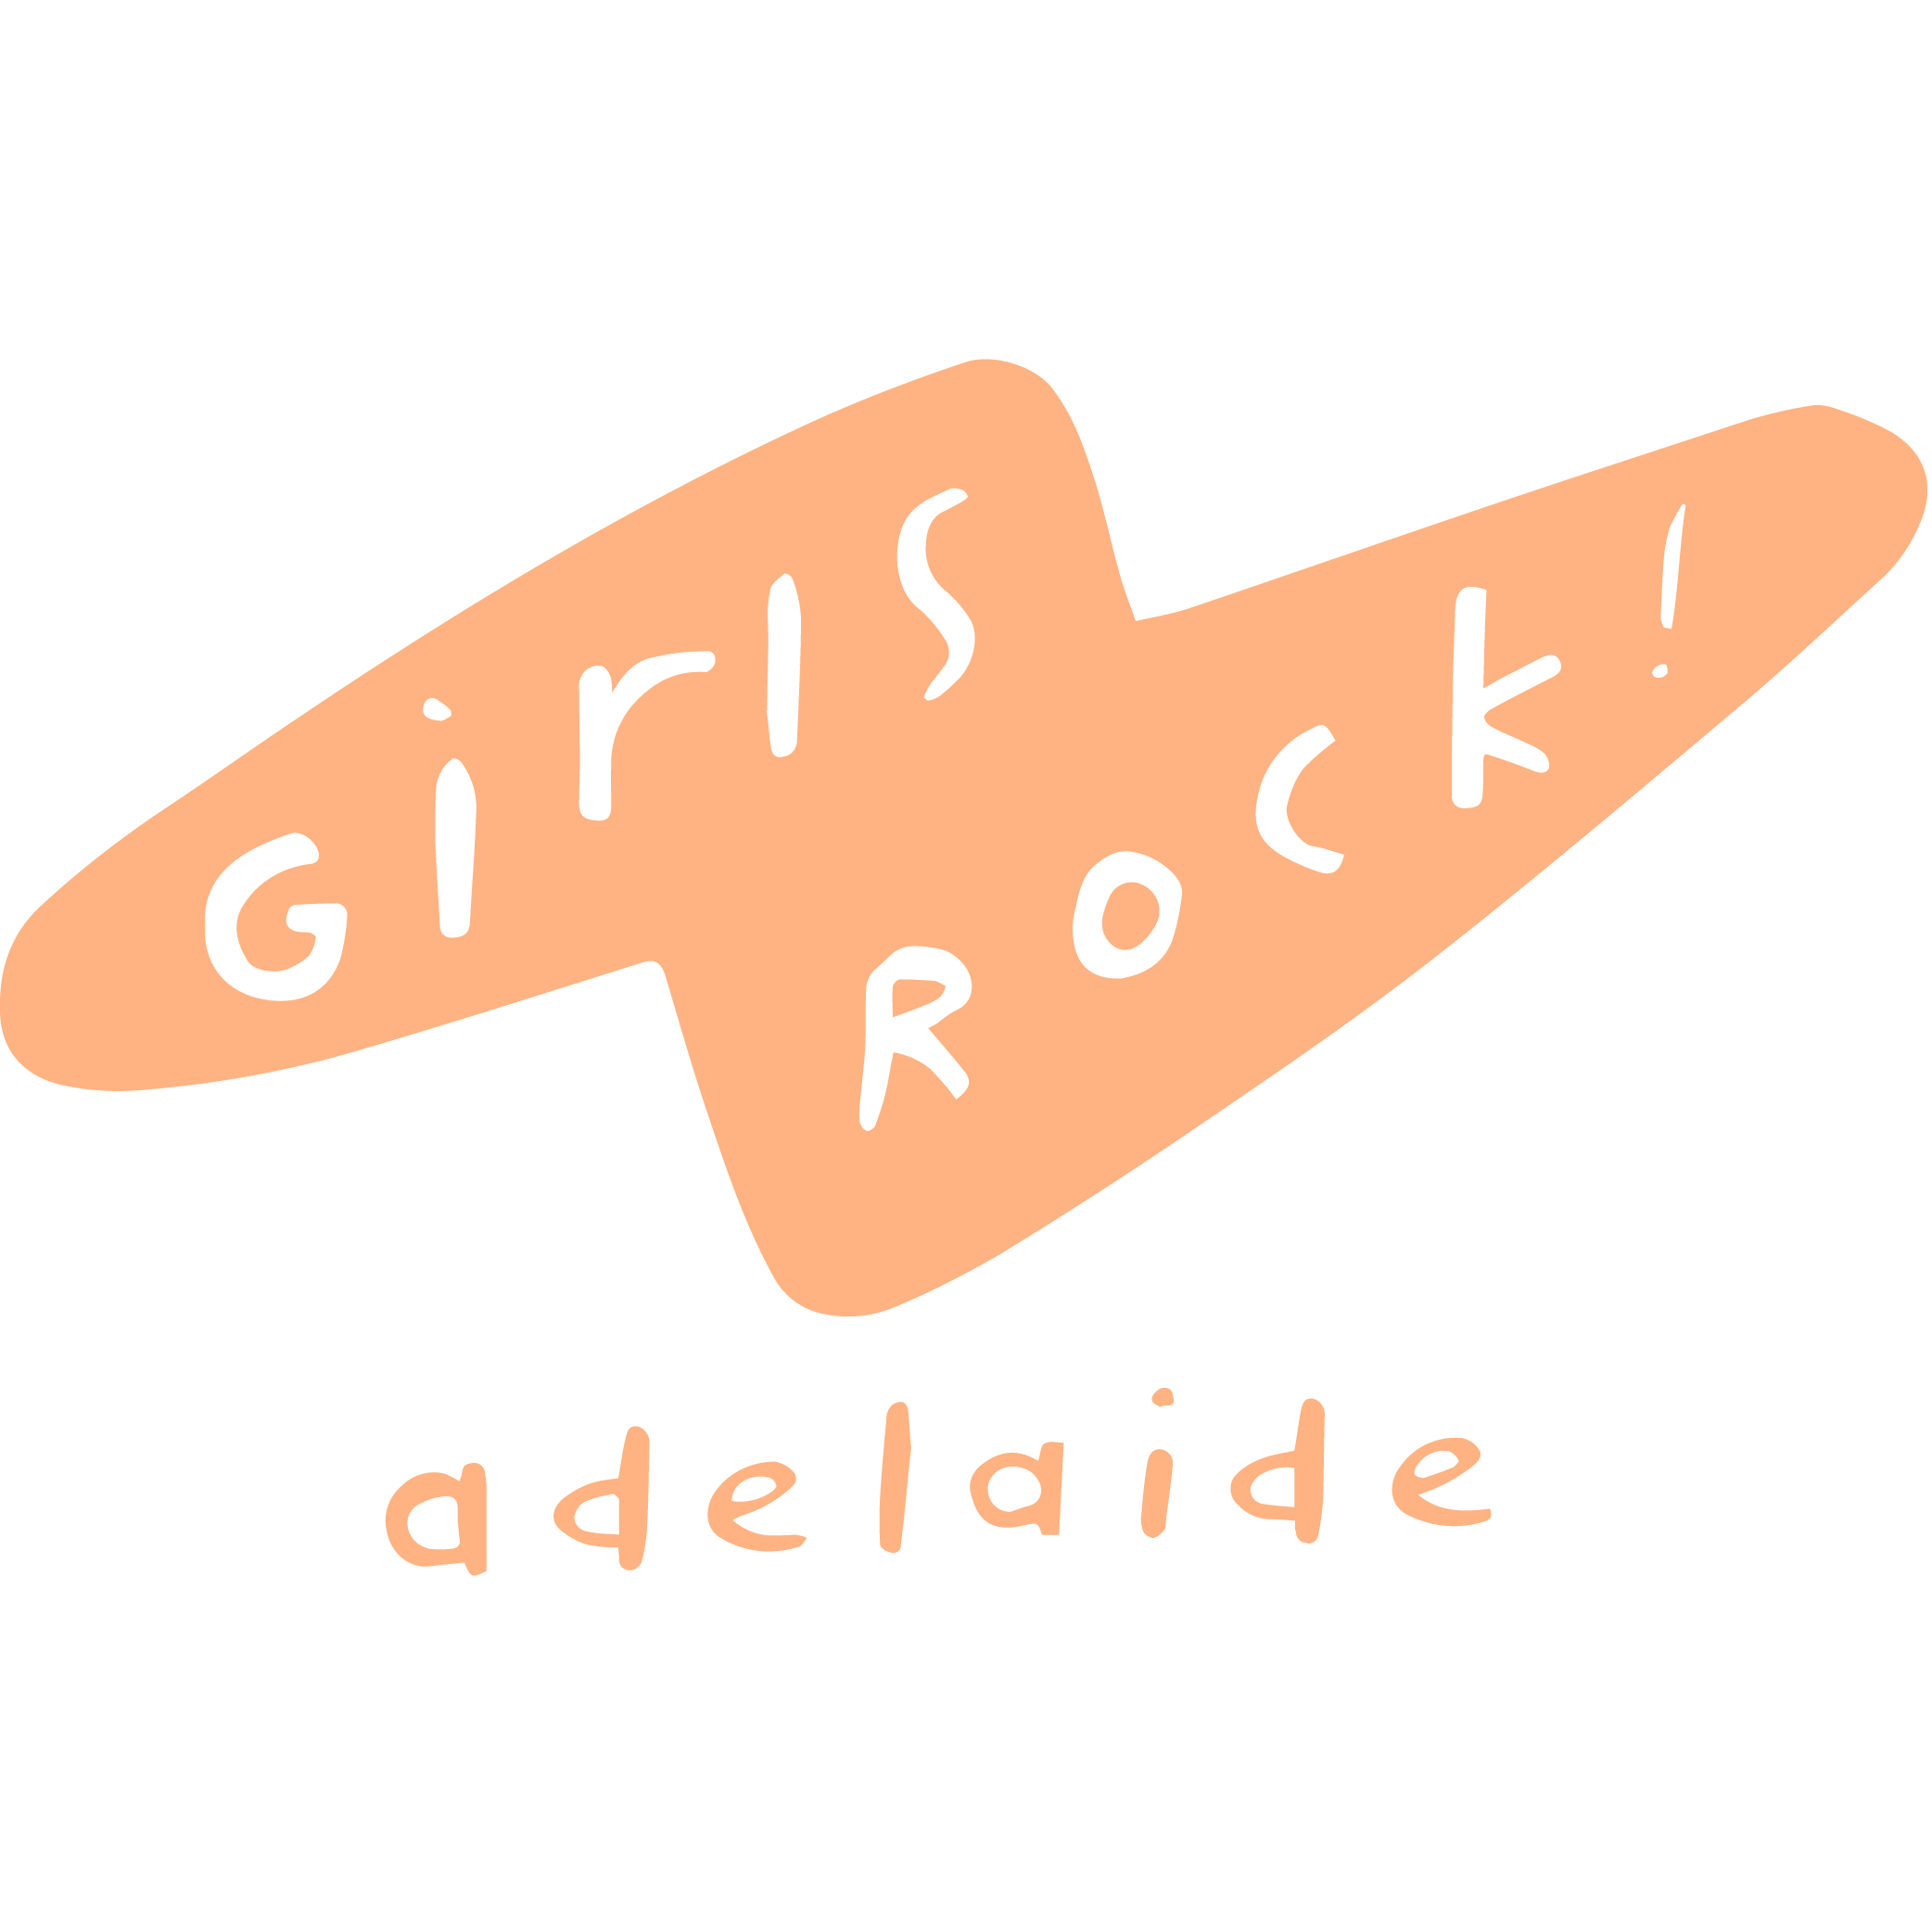 Girls Rock! Adelaide